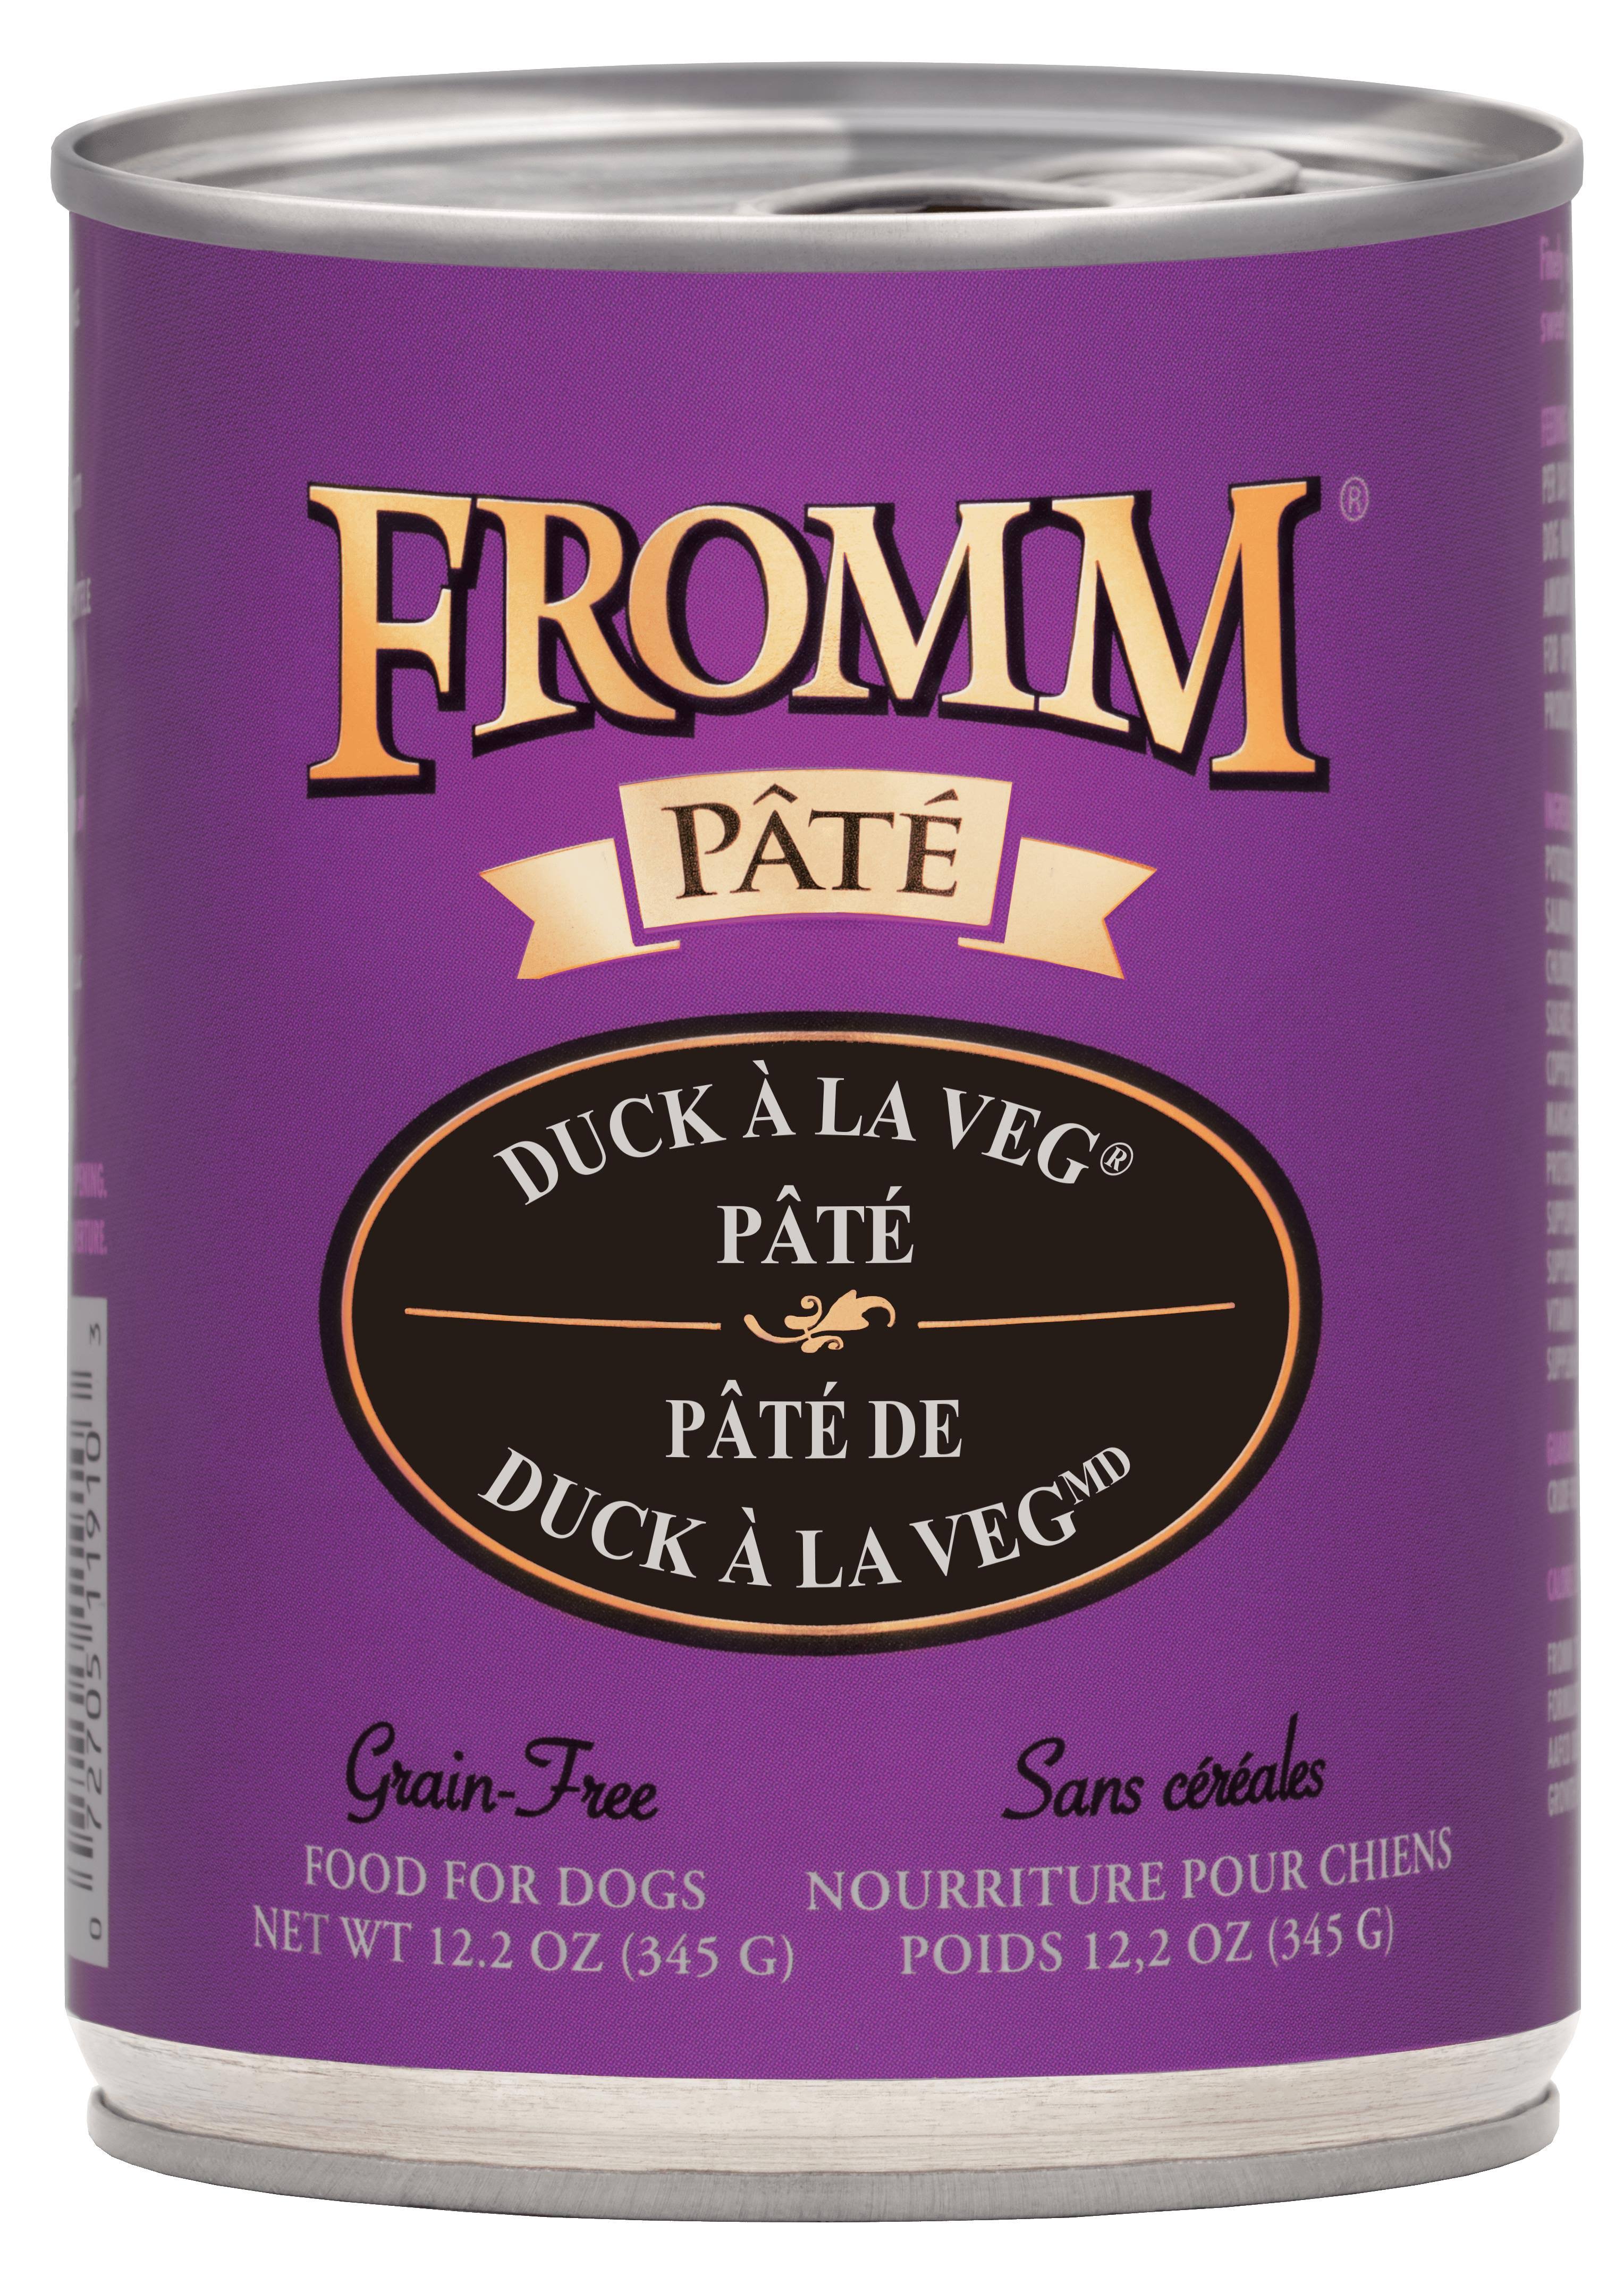 Fromm Duck A La Veg Pate Dog Food - 12.2 oz